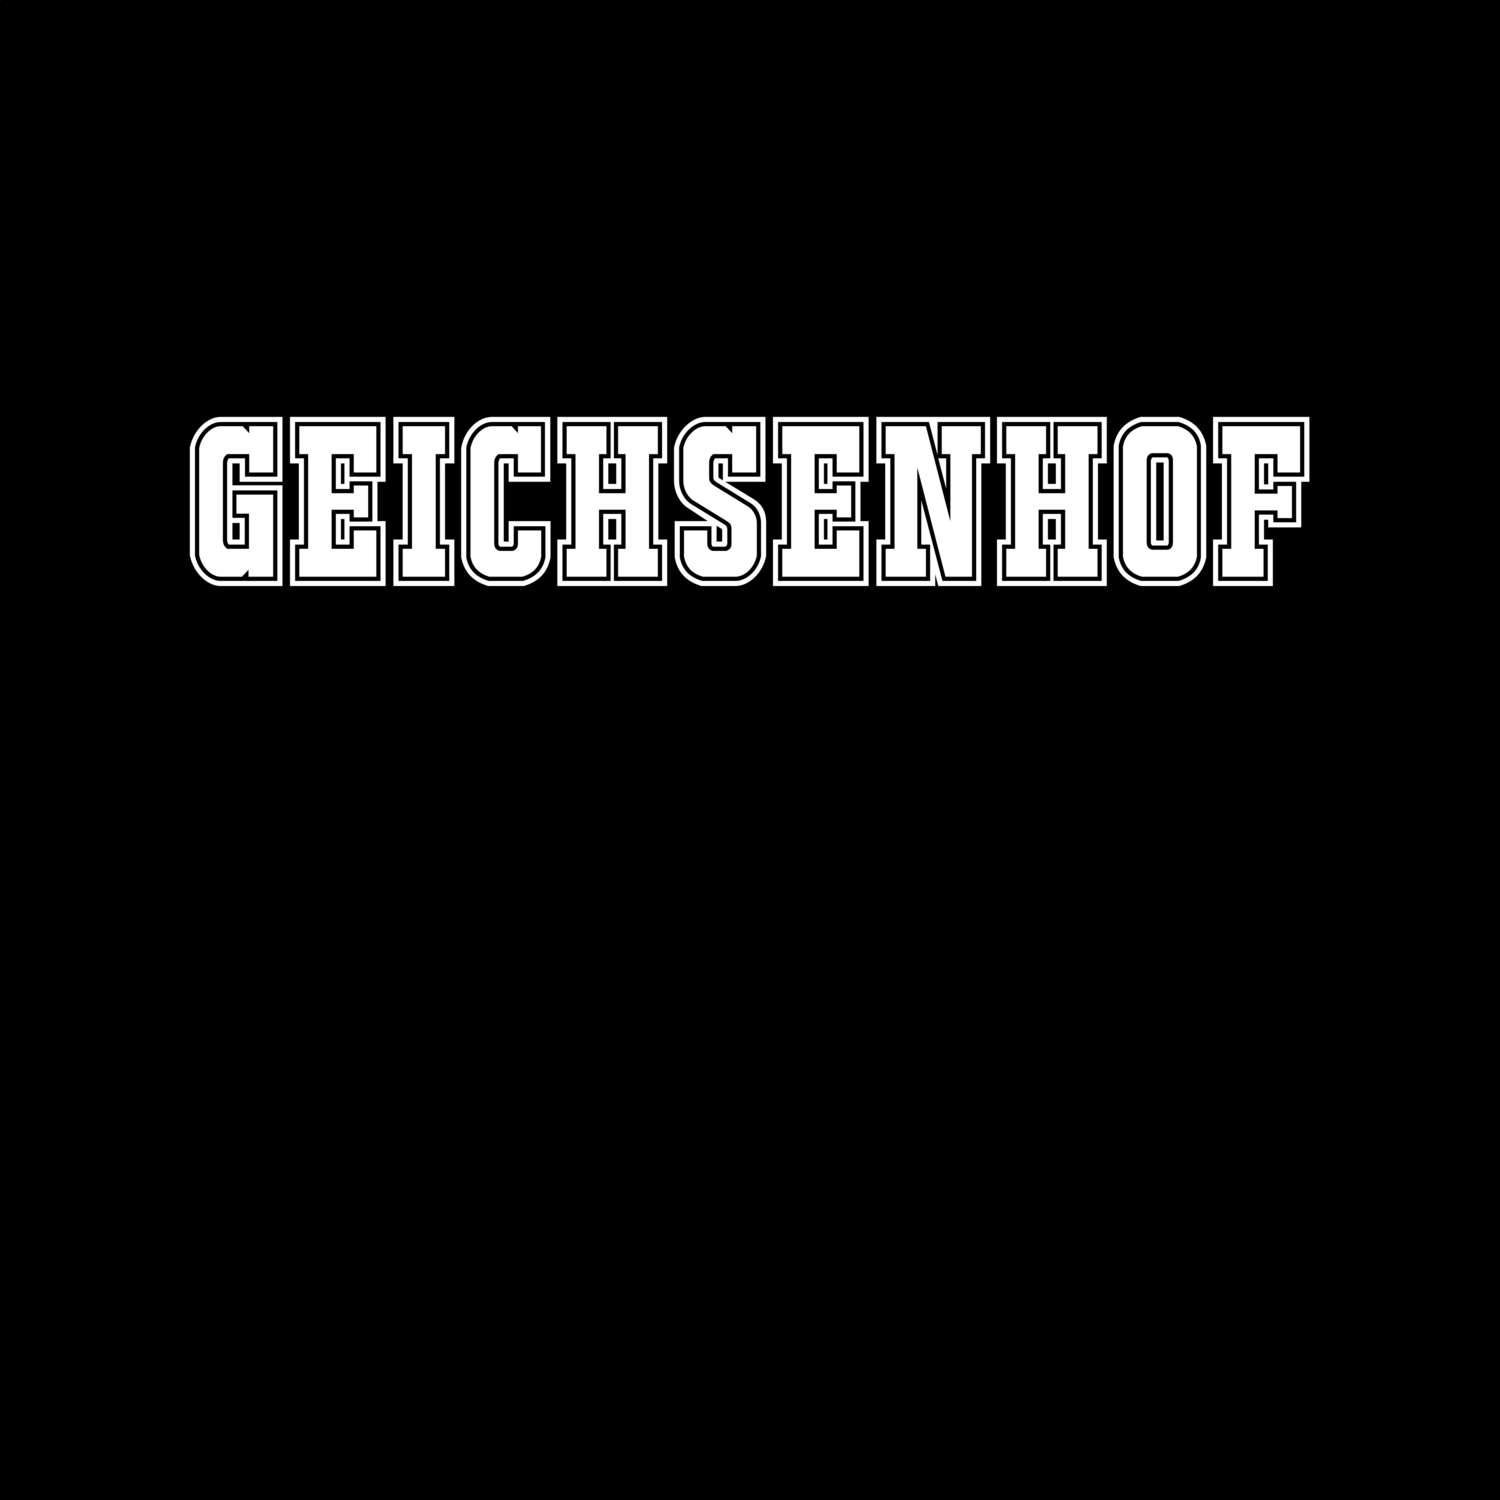 Geichsenhof T-Shirt »Classic«